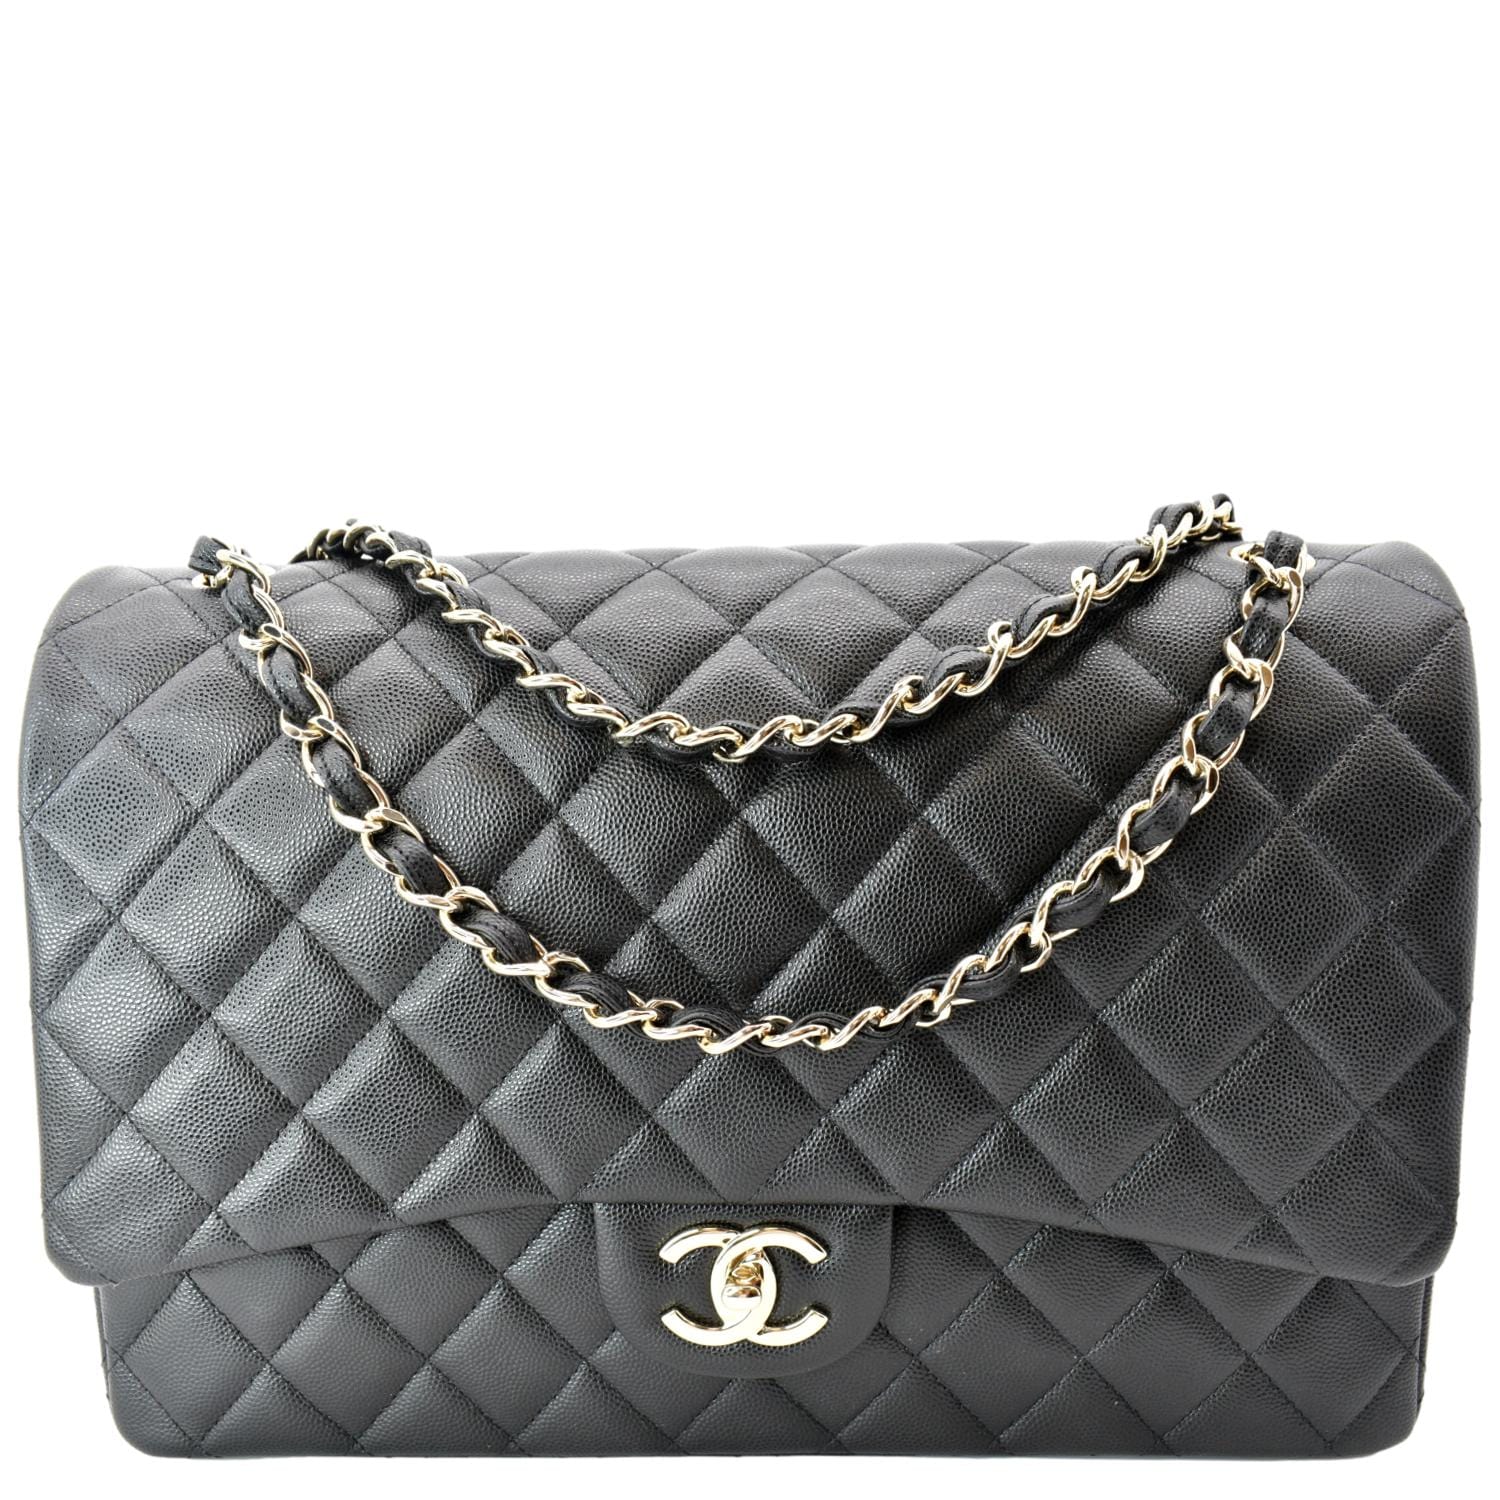 Chanel Jumbo Flap Bag, Medium Flap Bag Or The Maxi Flap Bag, Which